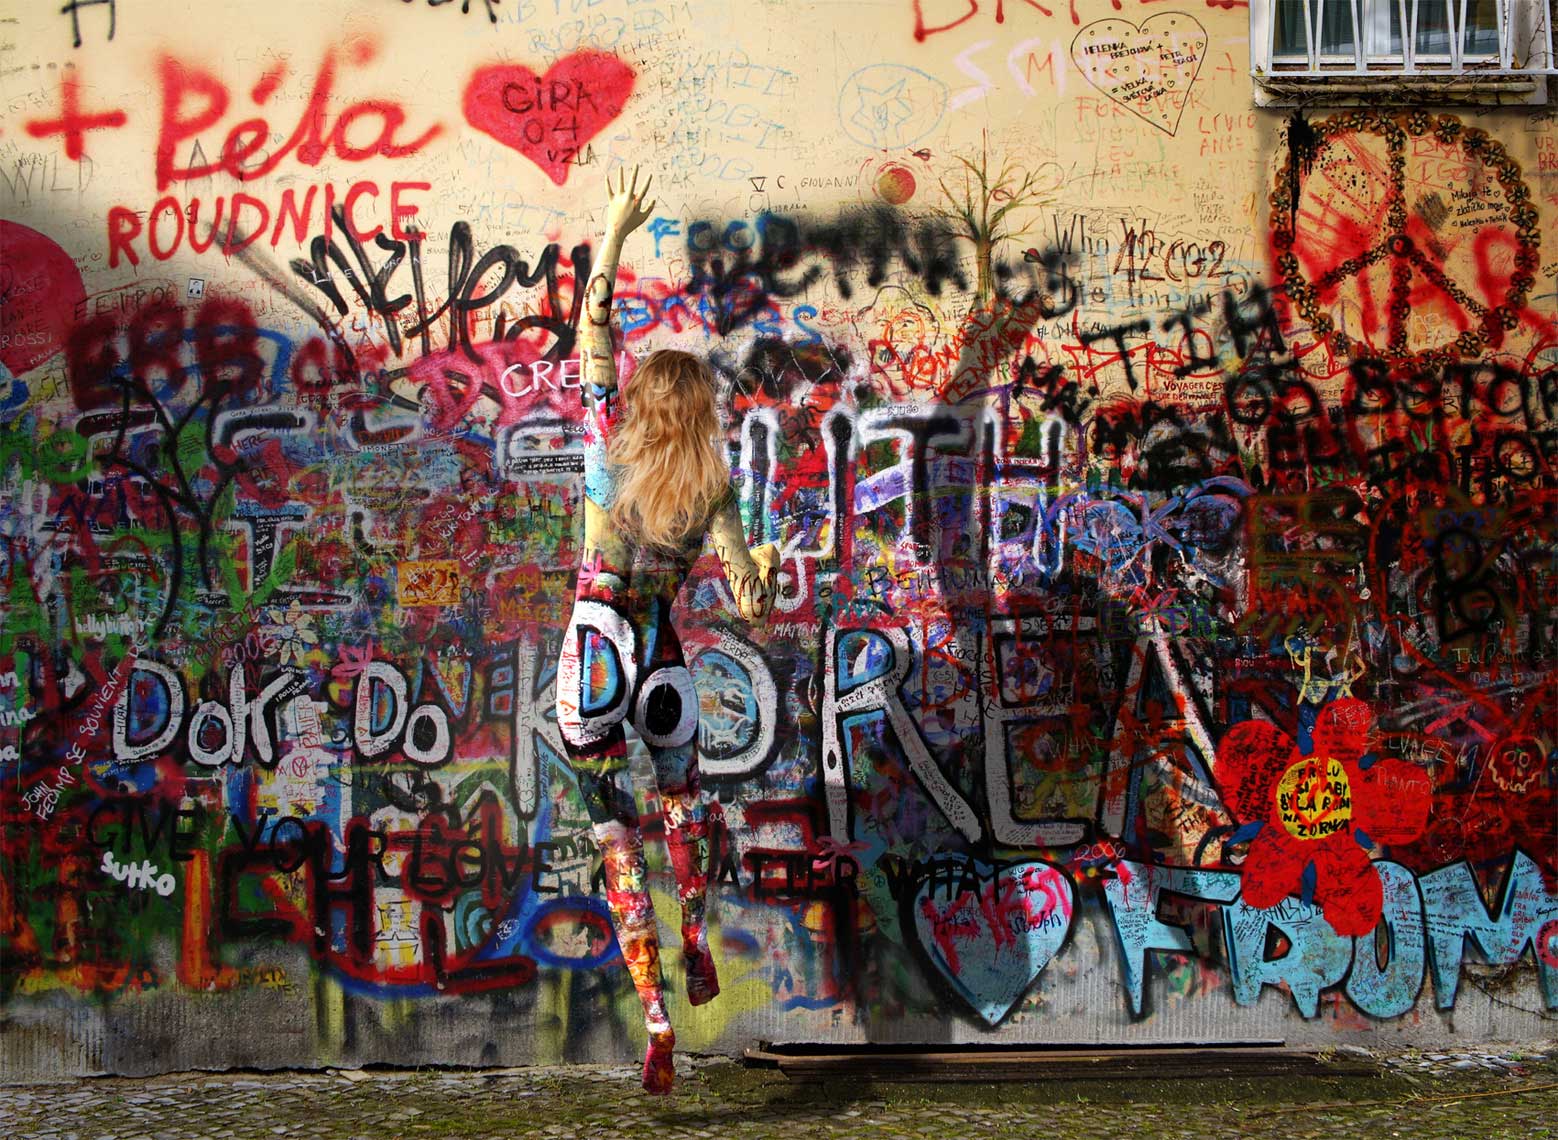 cgi_characters-wall-spray-painted-grafitti